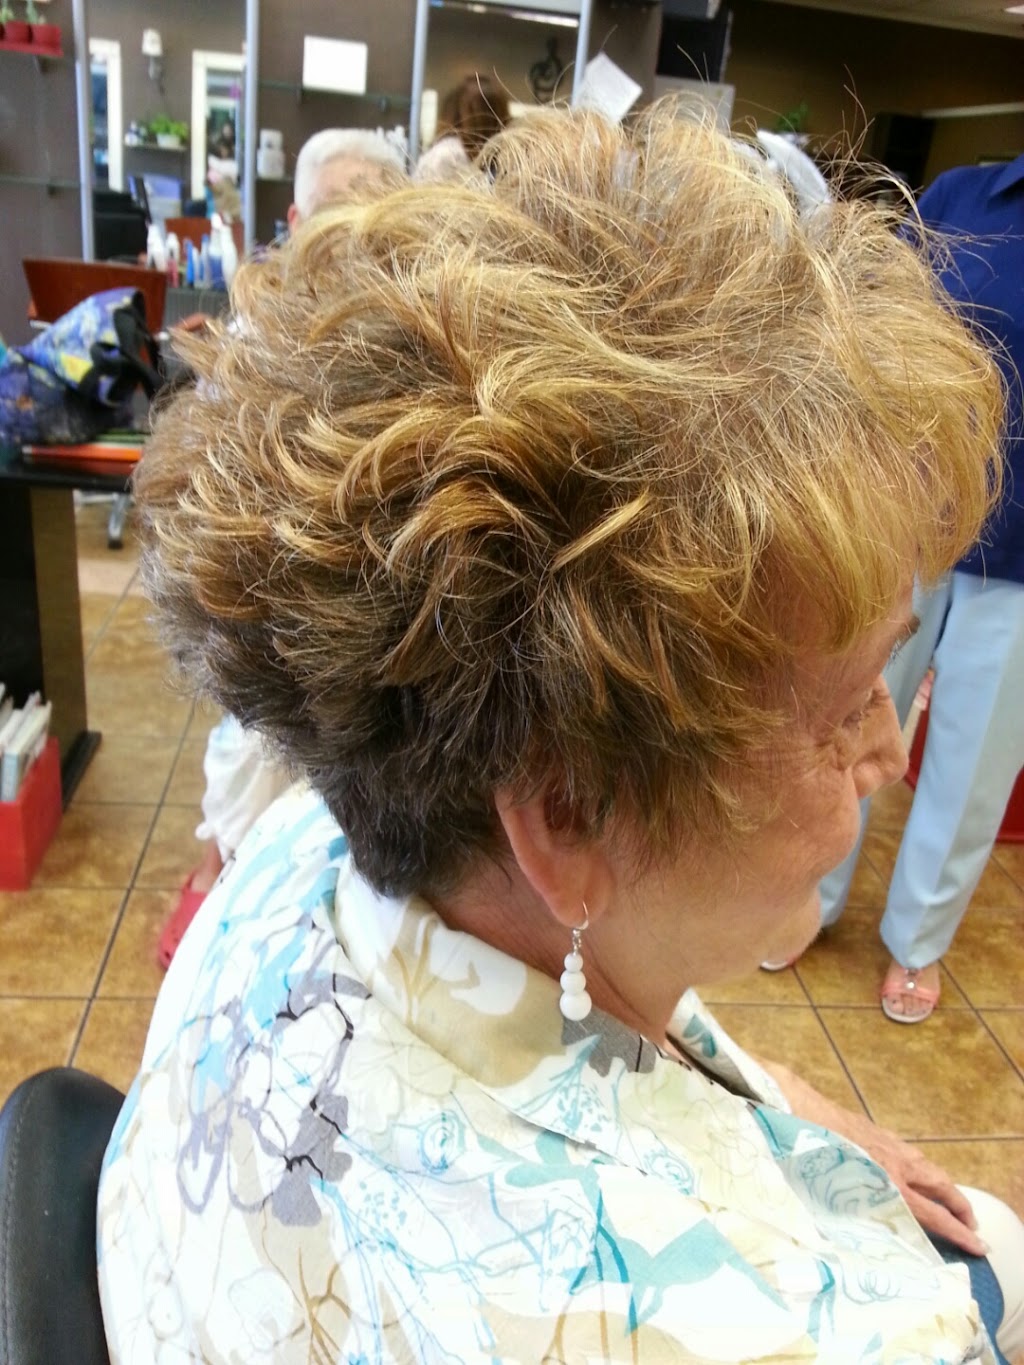 Liz Hair Salon | 3455 Peachtree Industrial Blvd #950, Duluth, GA 30096, USA | Phone: (678) 417-9577